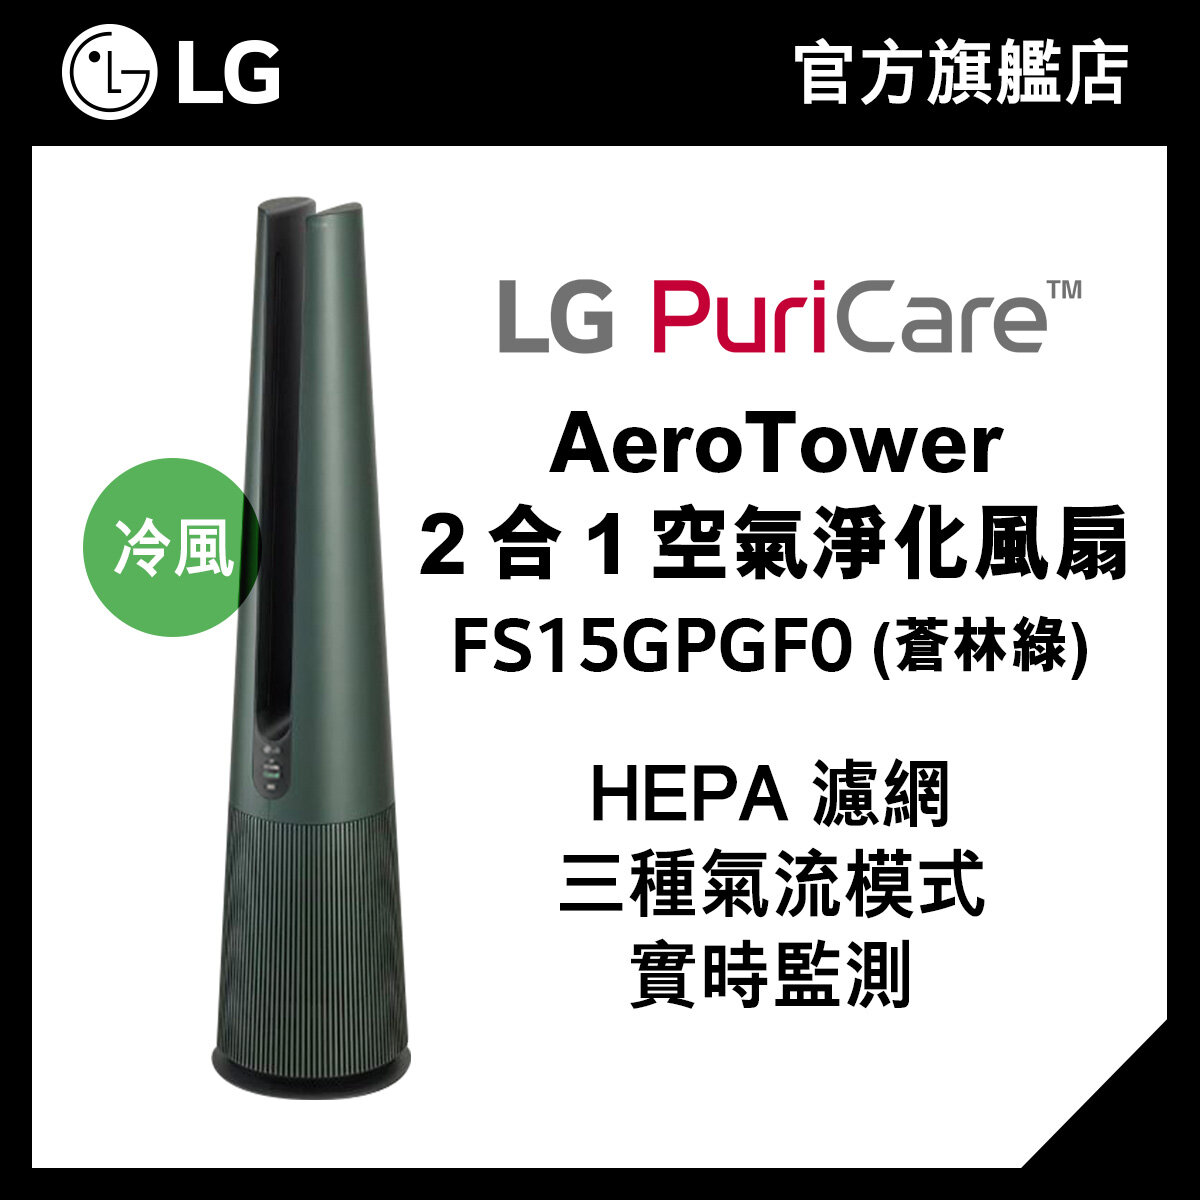 LG PuriCare™ AeroTower 2 合 1 空氣淨化風扇 (蒼林綠)